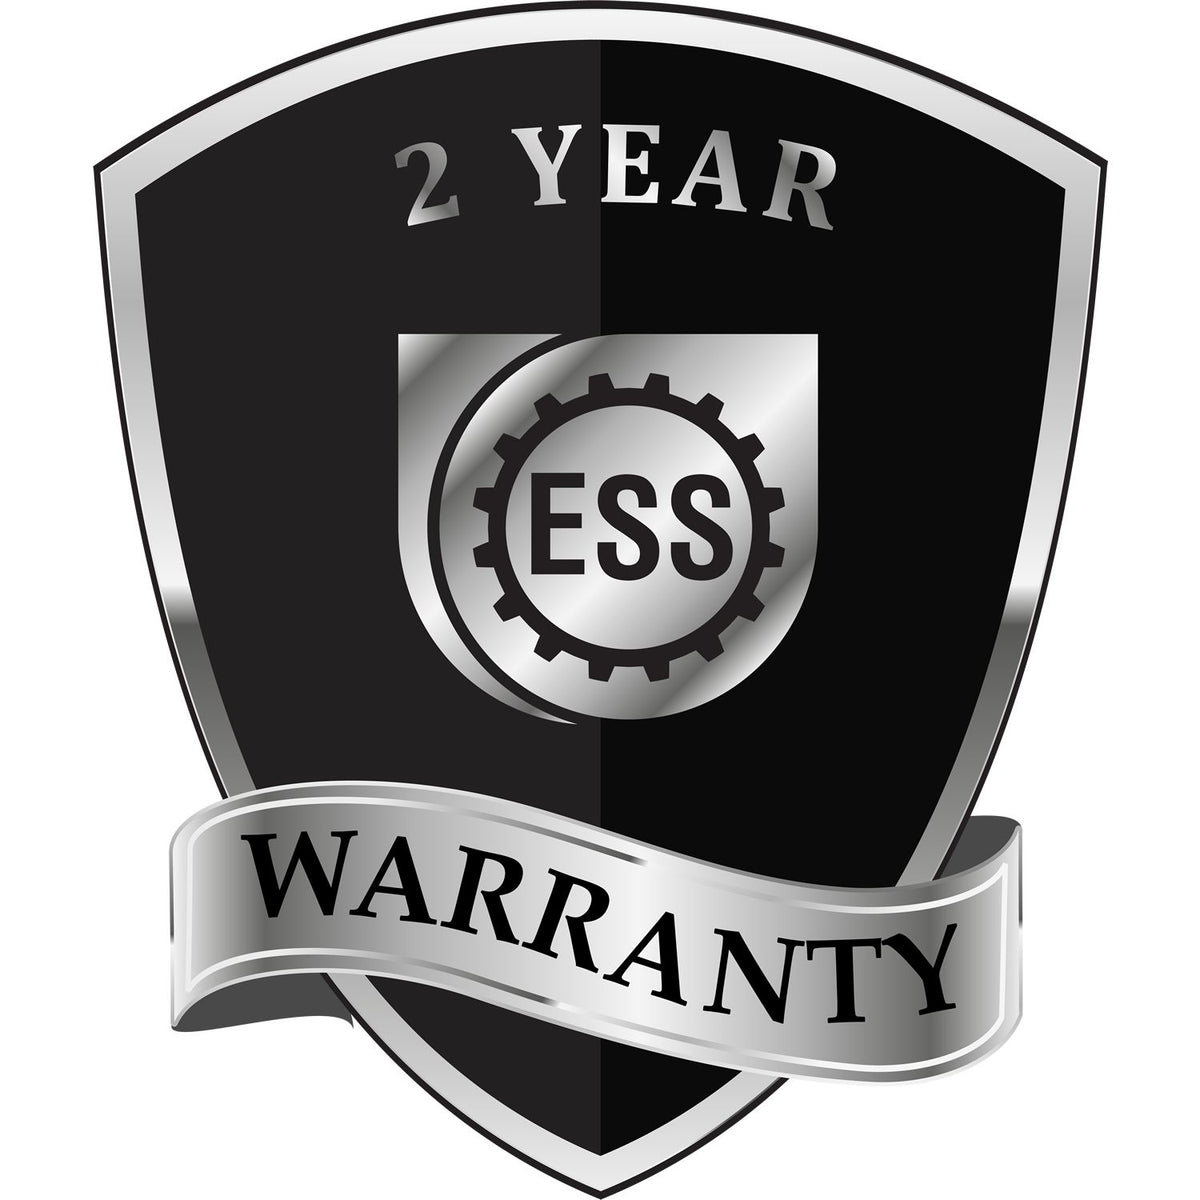 A black and silver badge or emblem showing warranty information for the Handheld Florida Professional Geologist Embosser